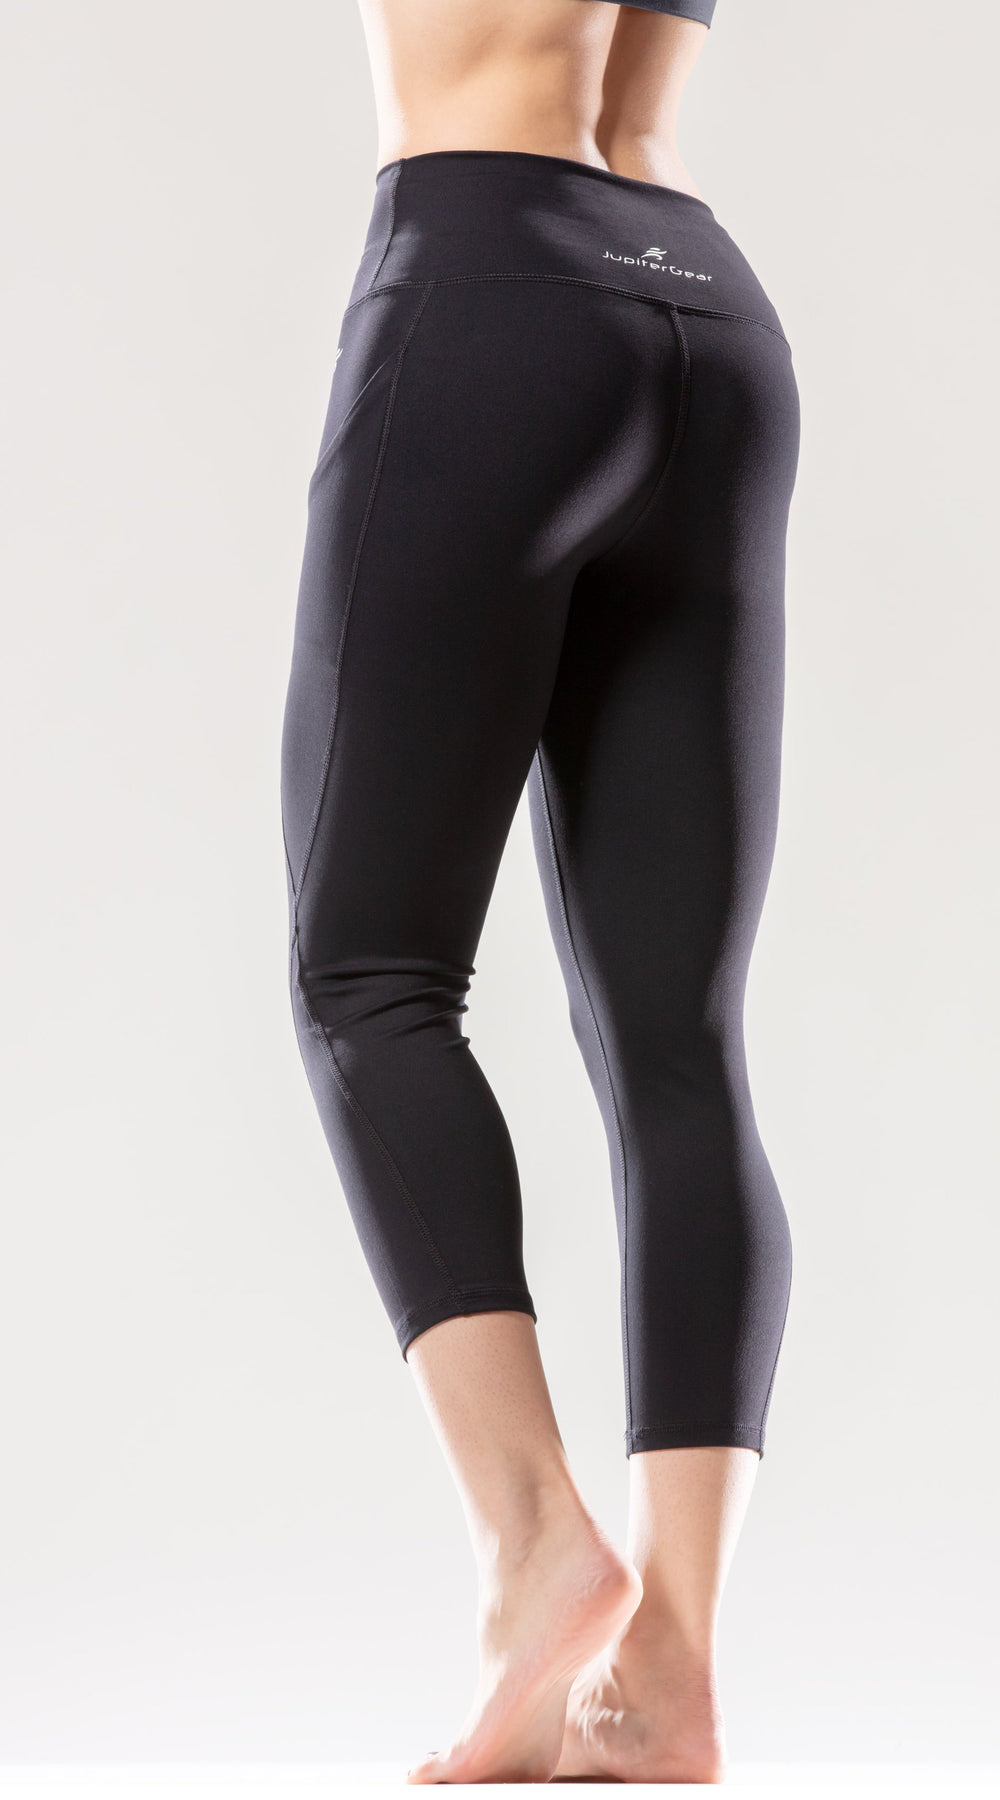 jolie high-waisted capri leggings with hip pockets